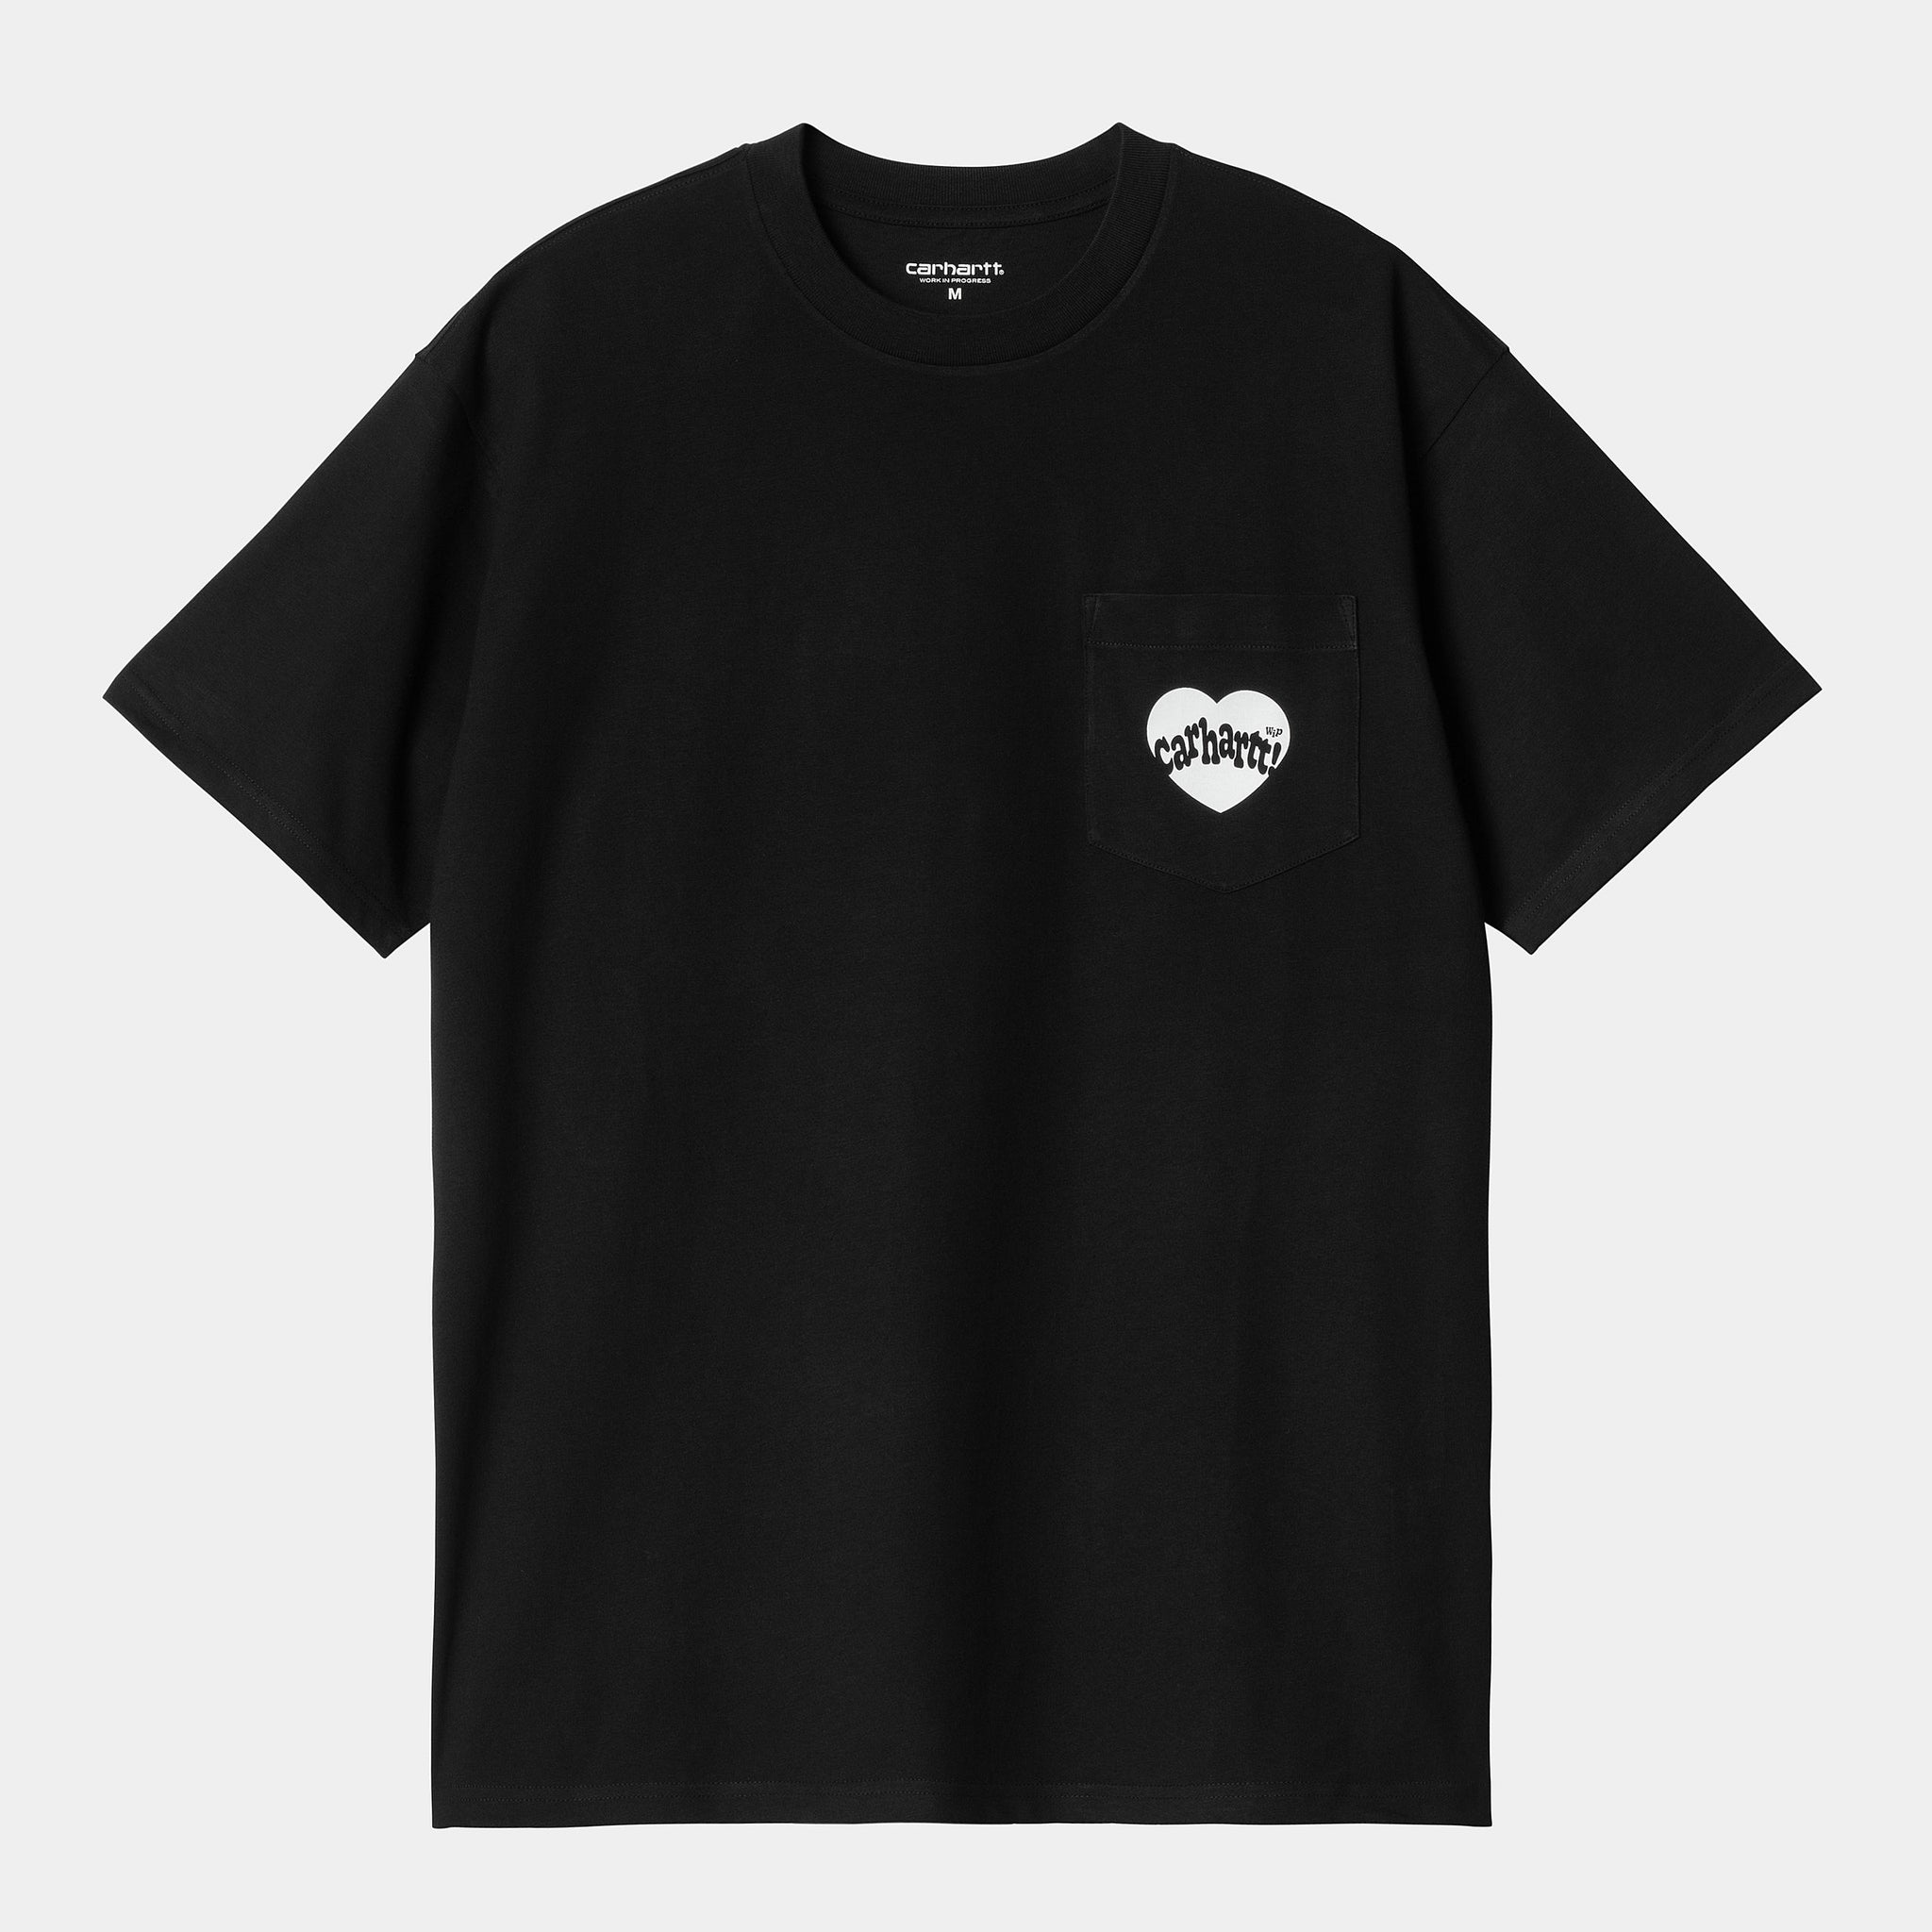 Carhartt WIP S/S Amour Pocket T-Shirt  (Black / White)